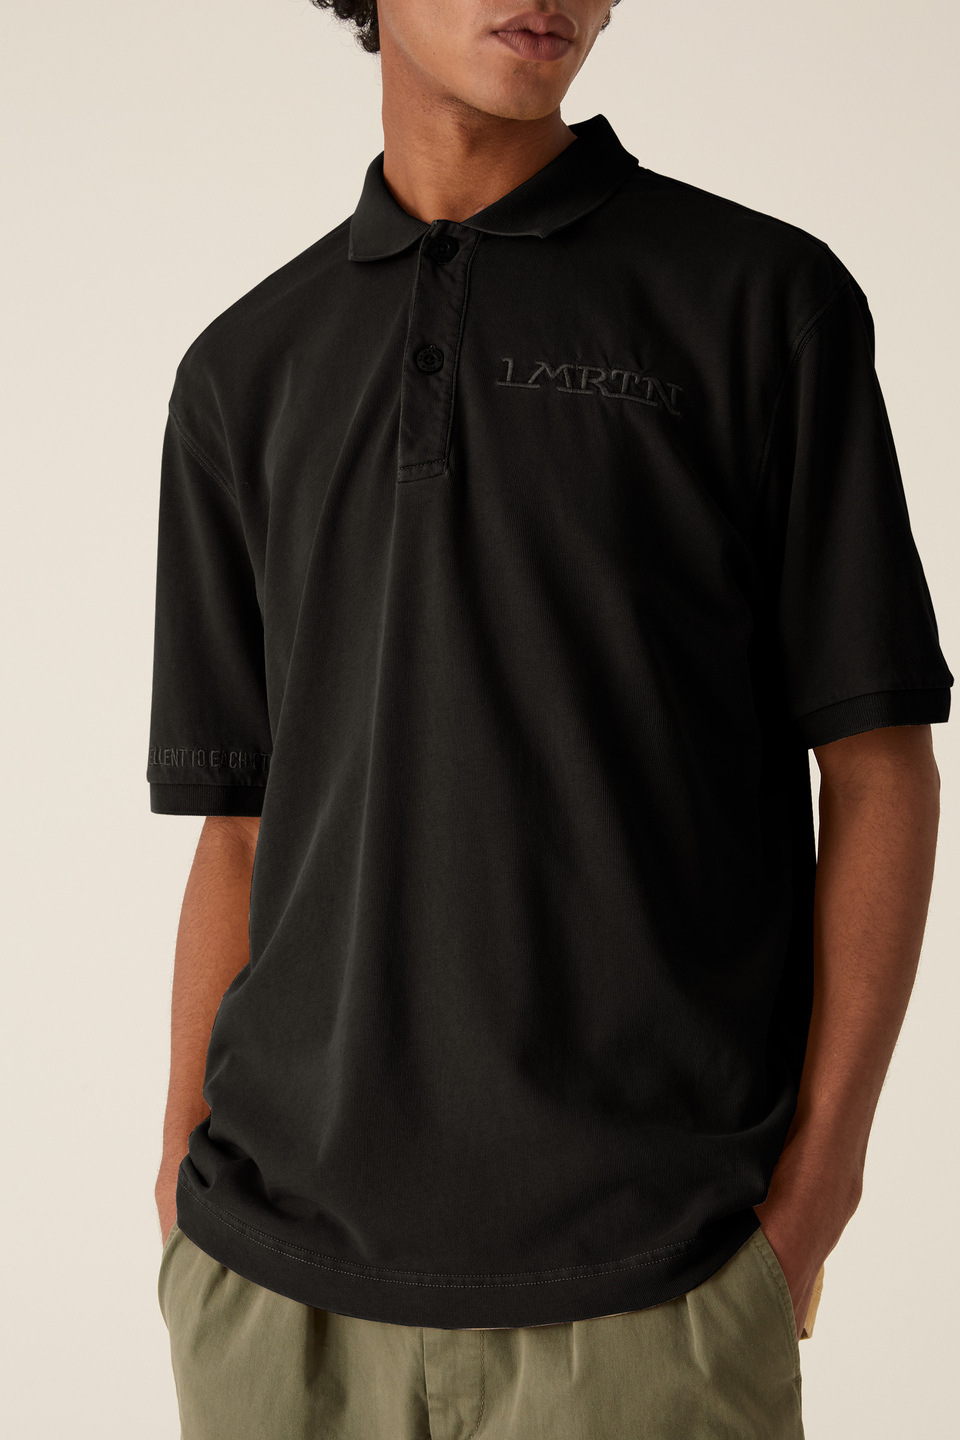 LMRTN cotton polo shirt | La Martina - Official Online Shop